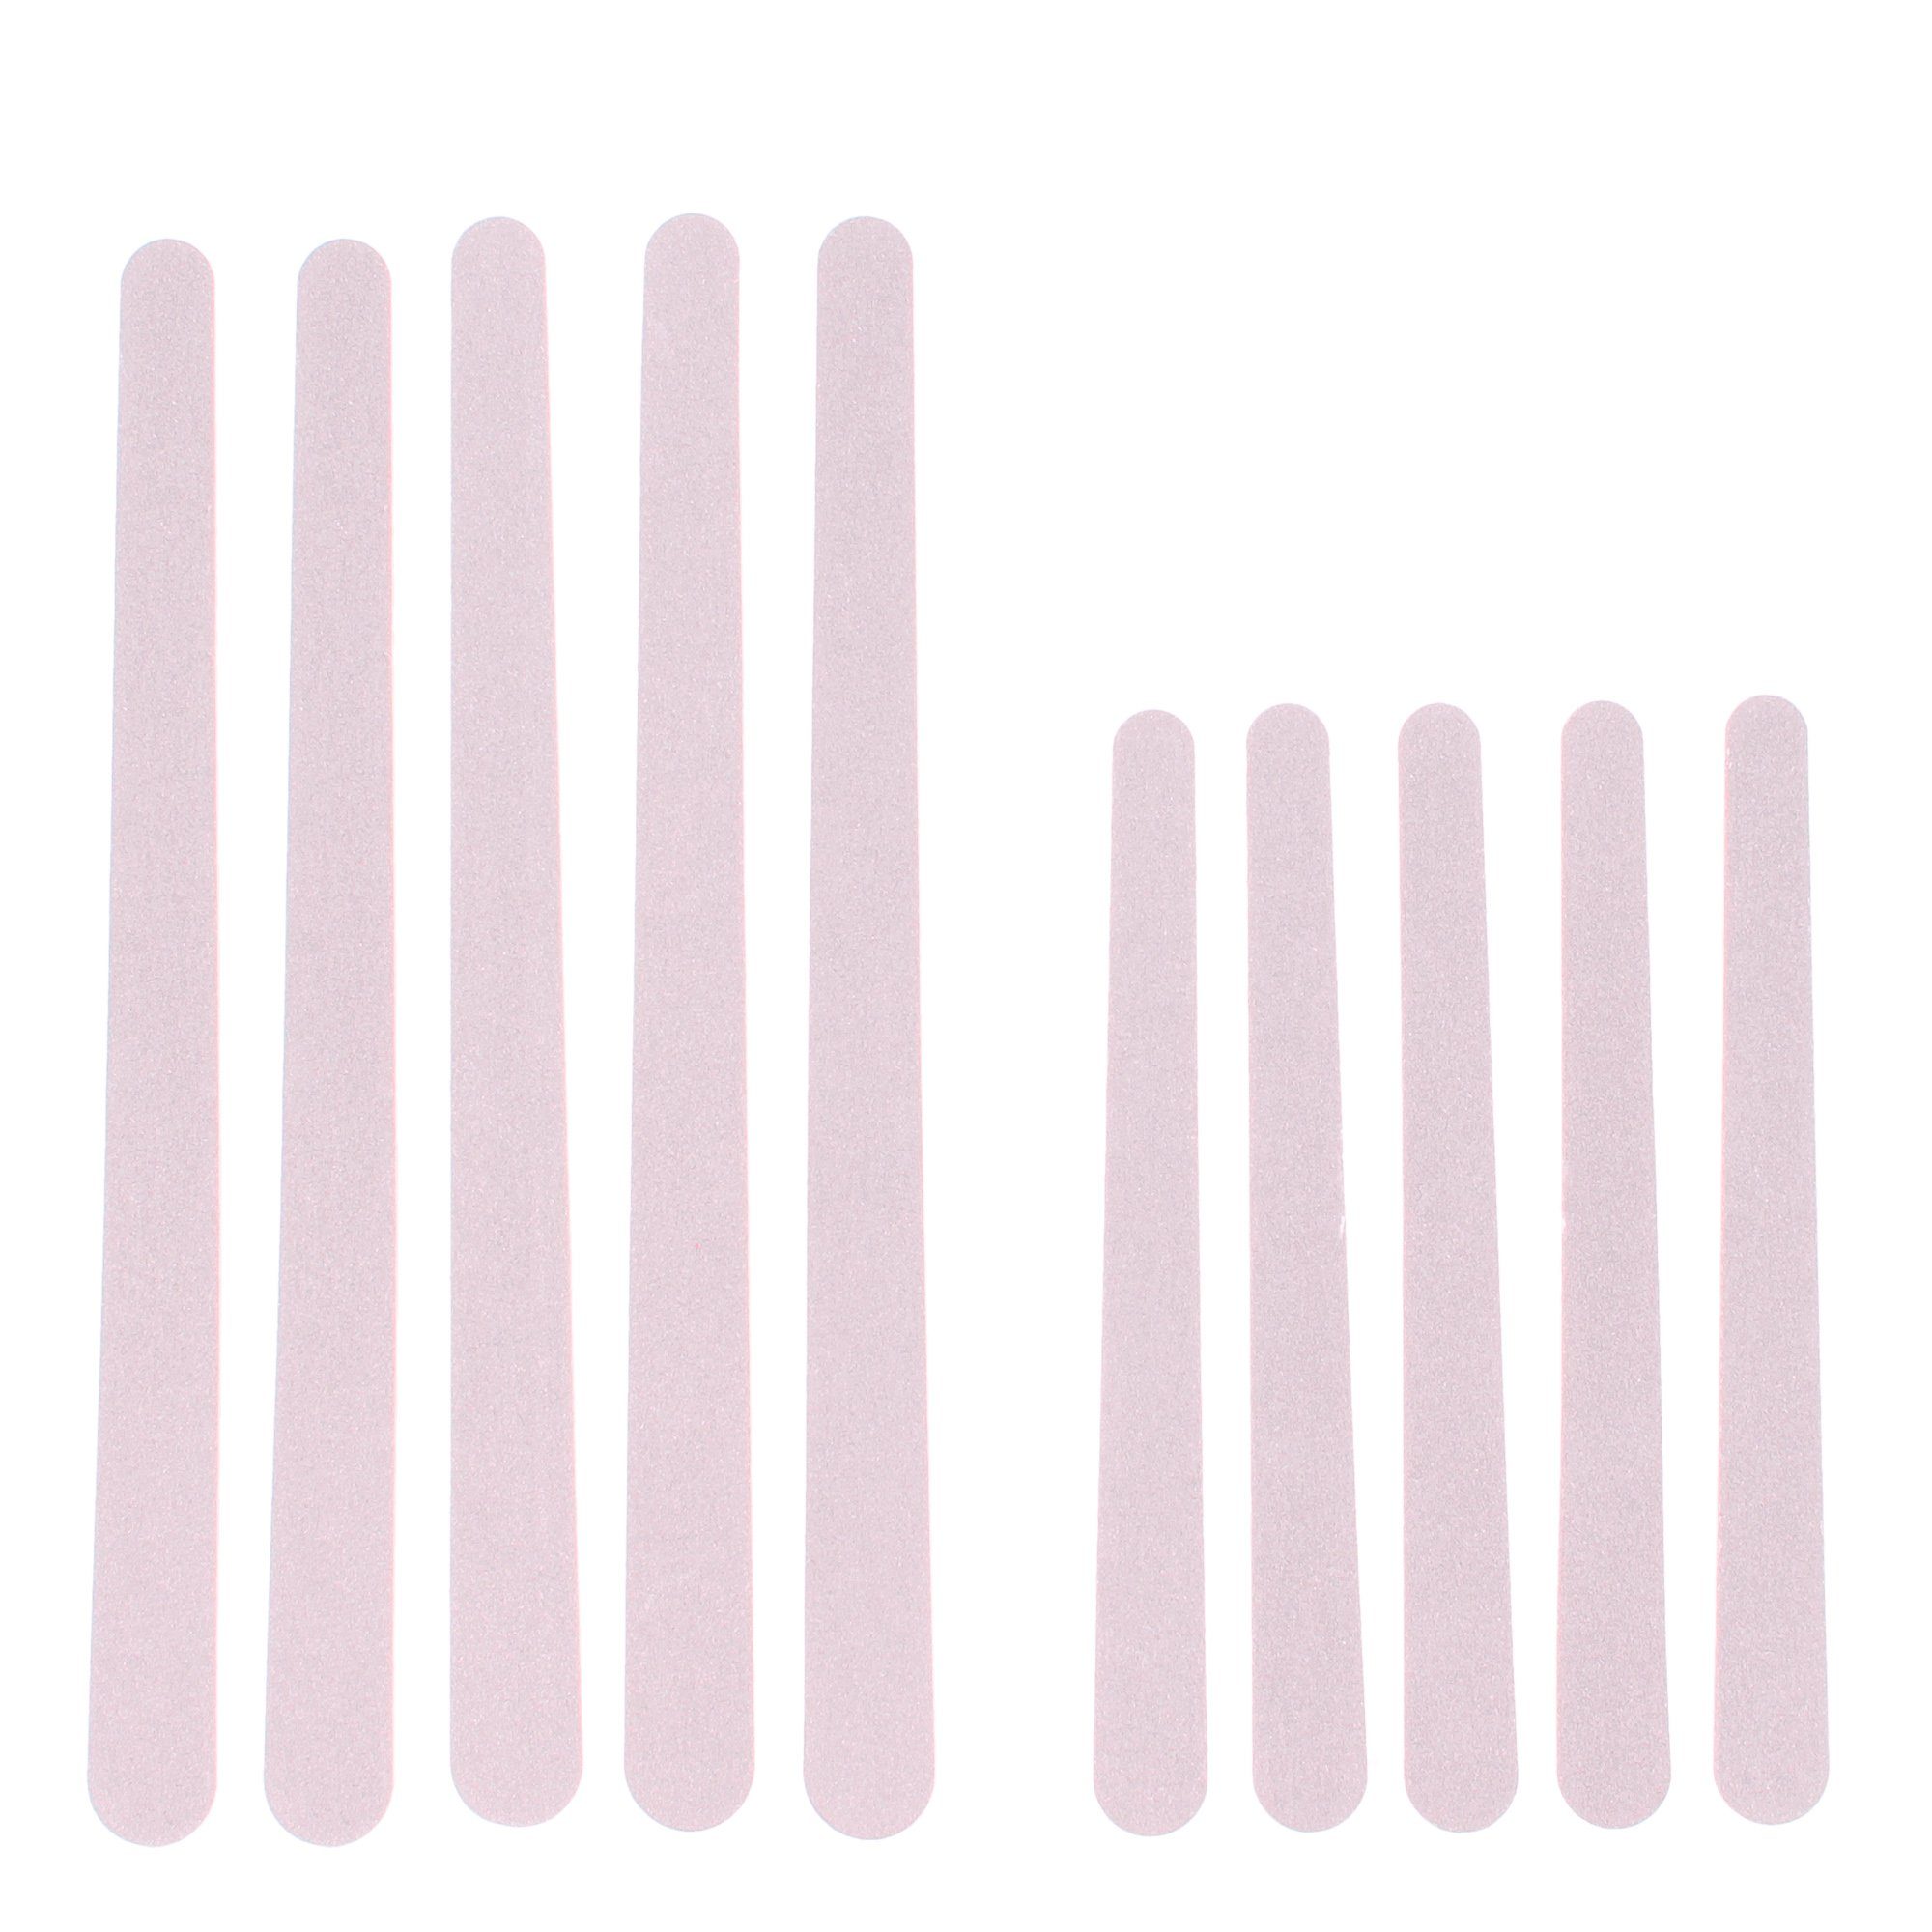 PARSA Beauty Sandblatt-Nagelfeile »Nagelfeilpapier, 10 Stück« online kaufen  | OTTO